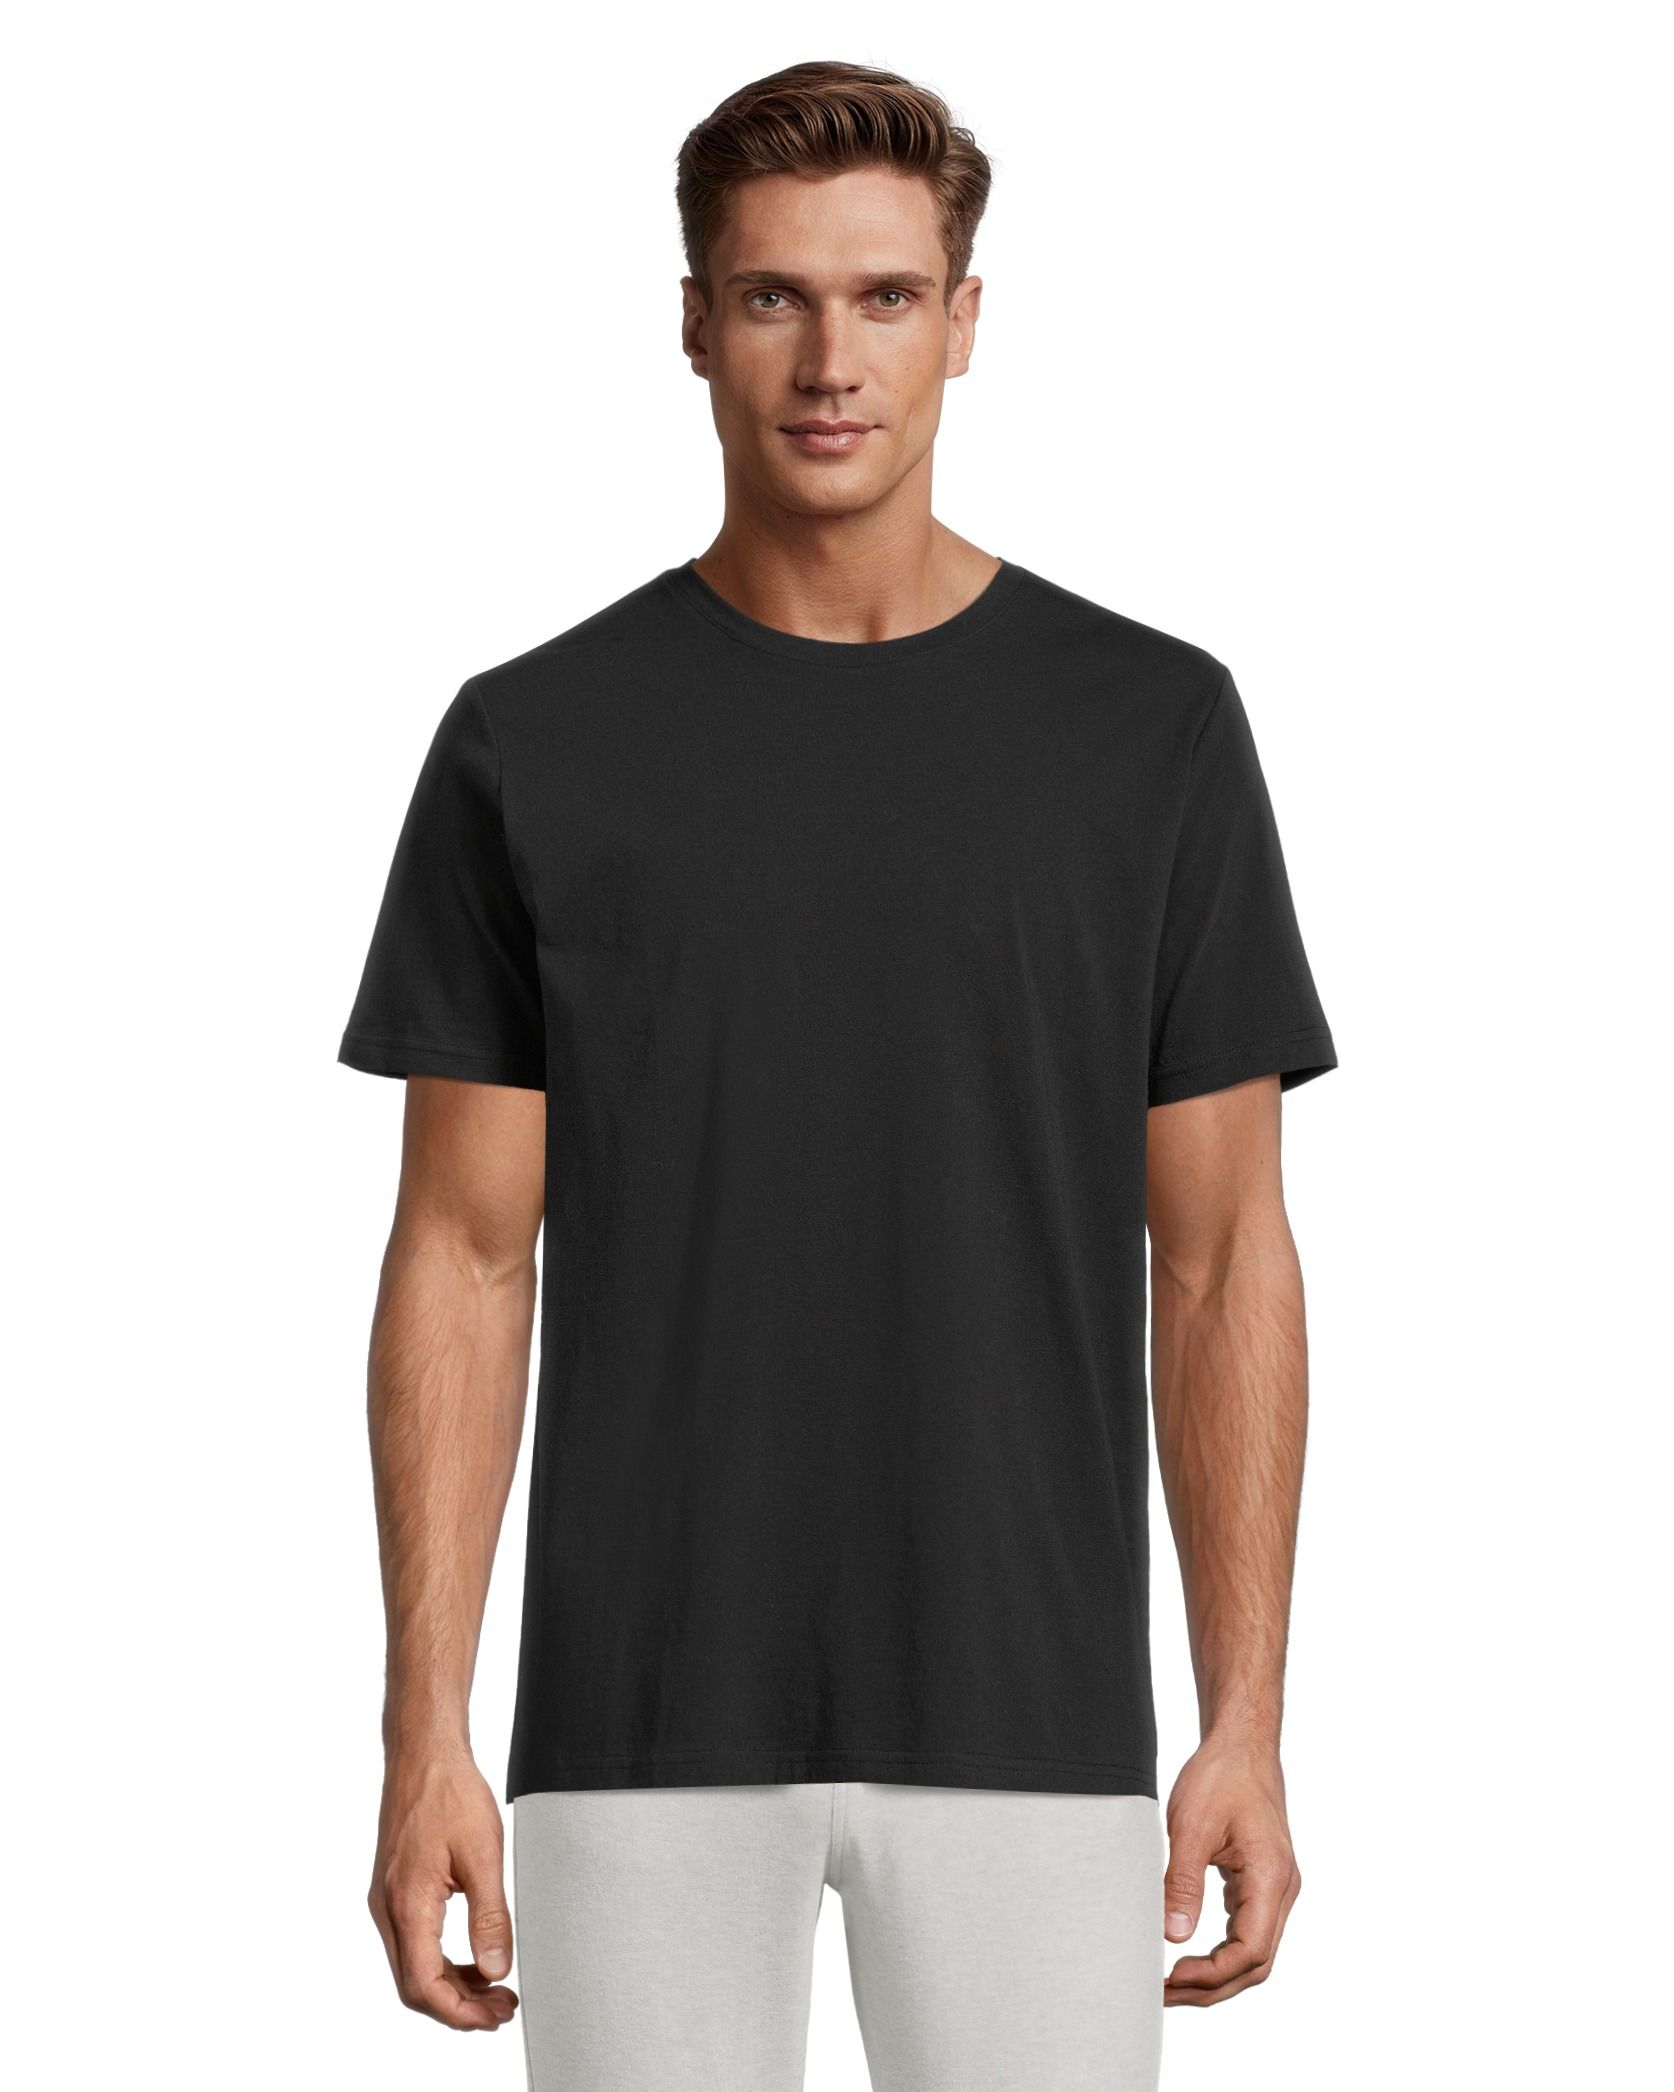 Ripzone Men's Ross T Shirt  Short Sleeve Crew Neck Cotton Casual